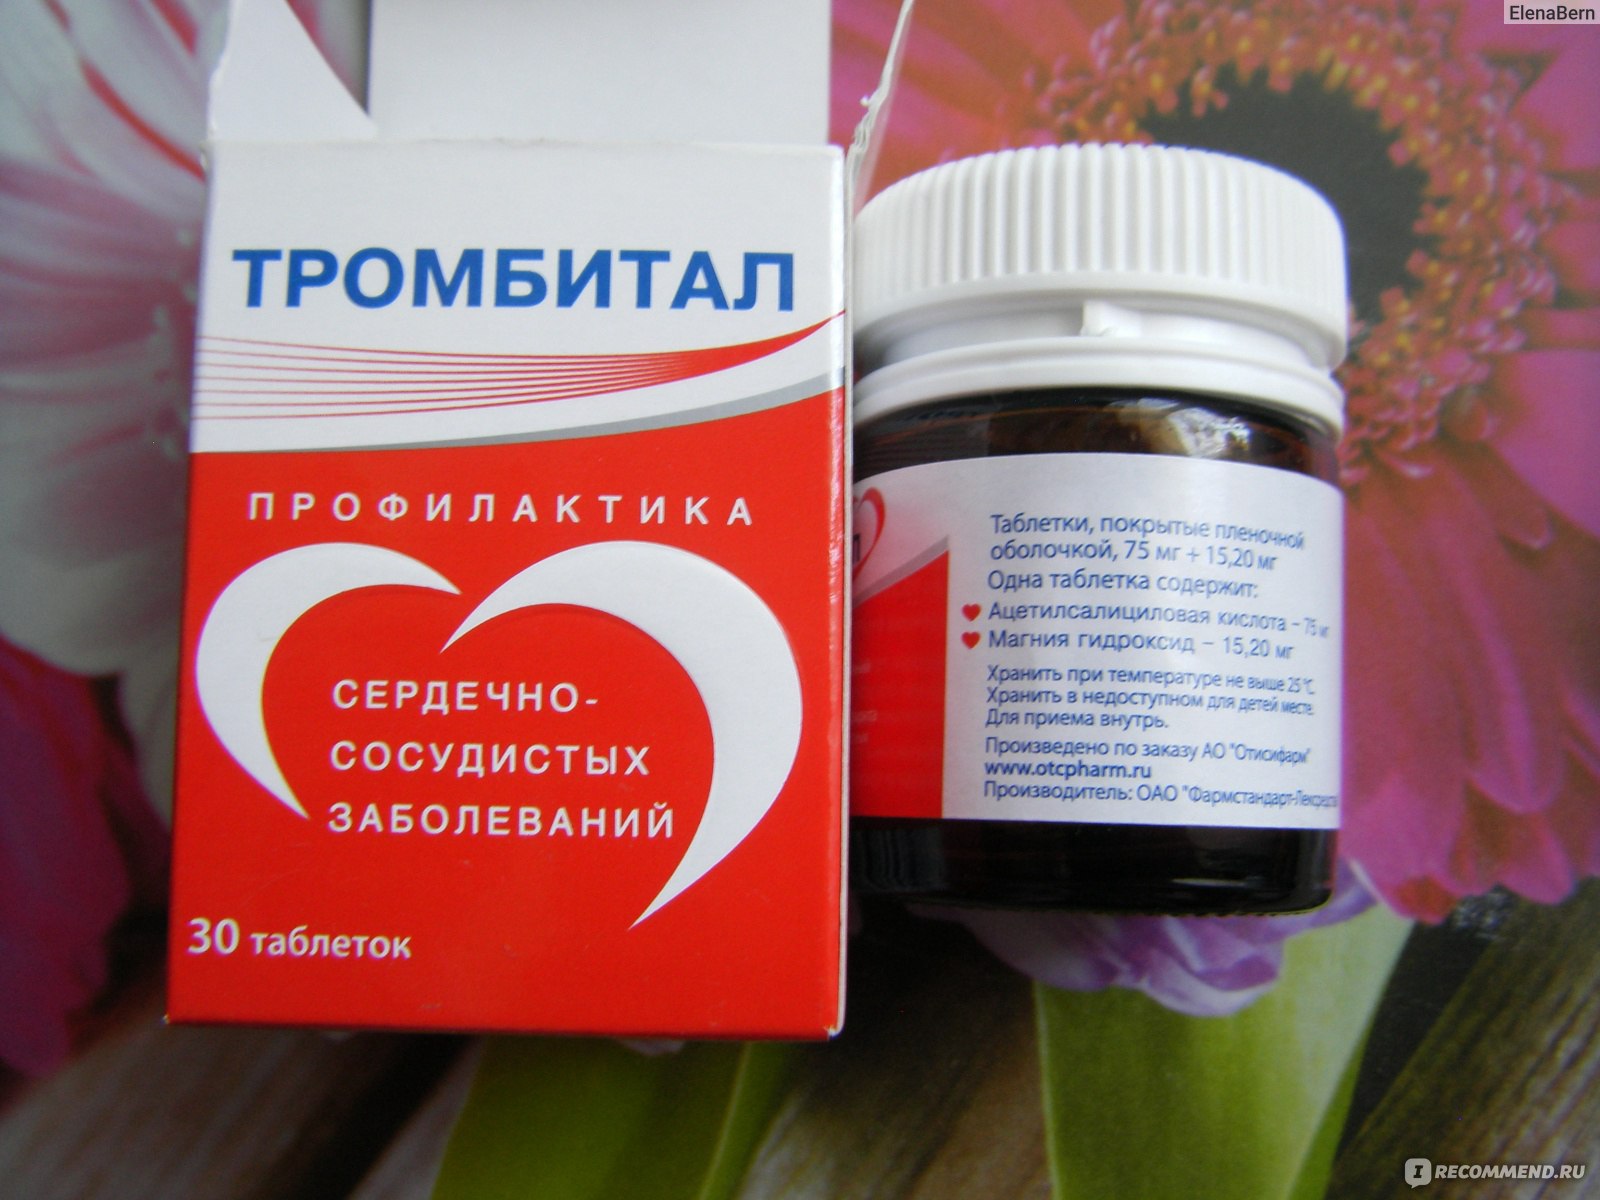 Тромбитал 150 мг